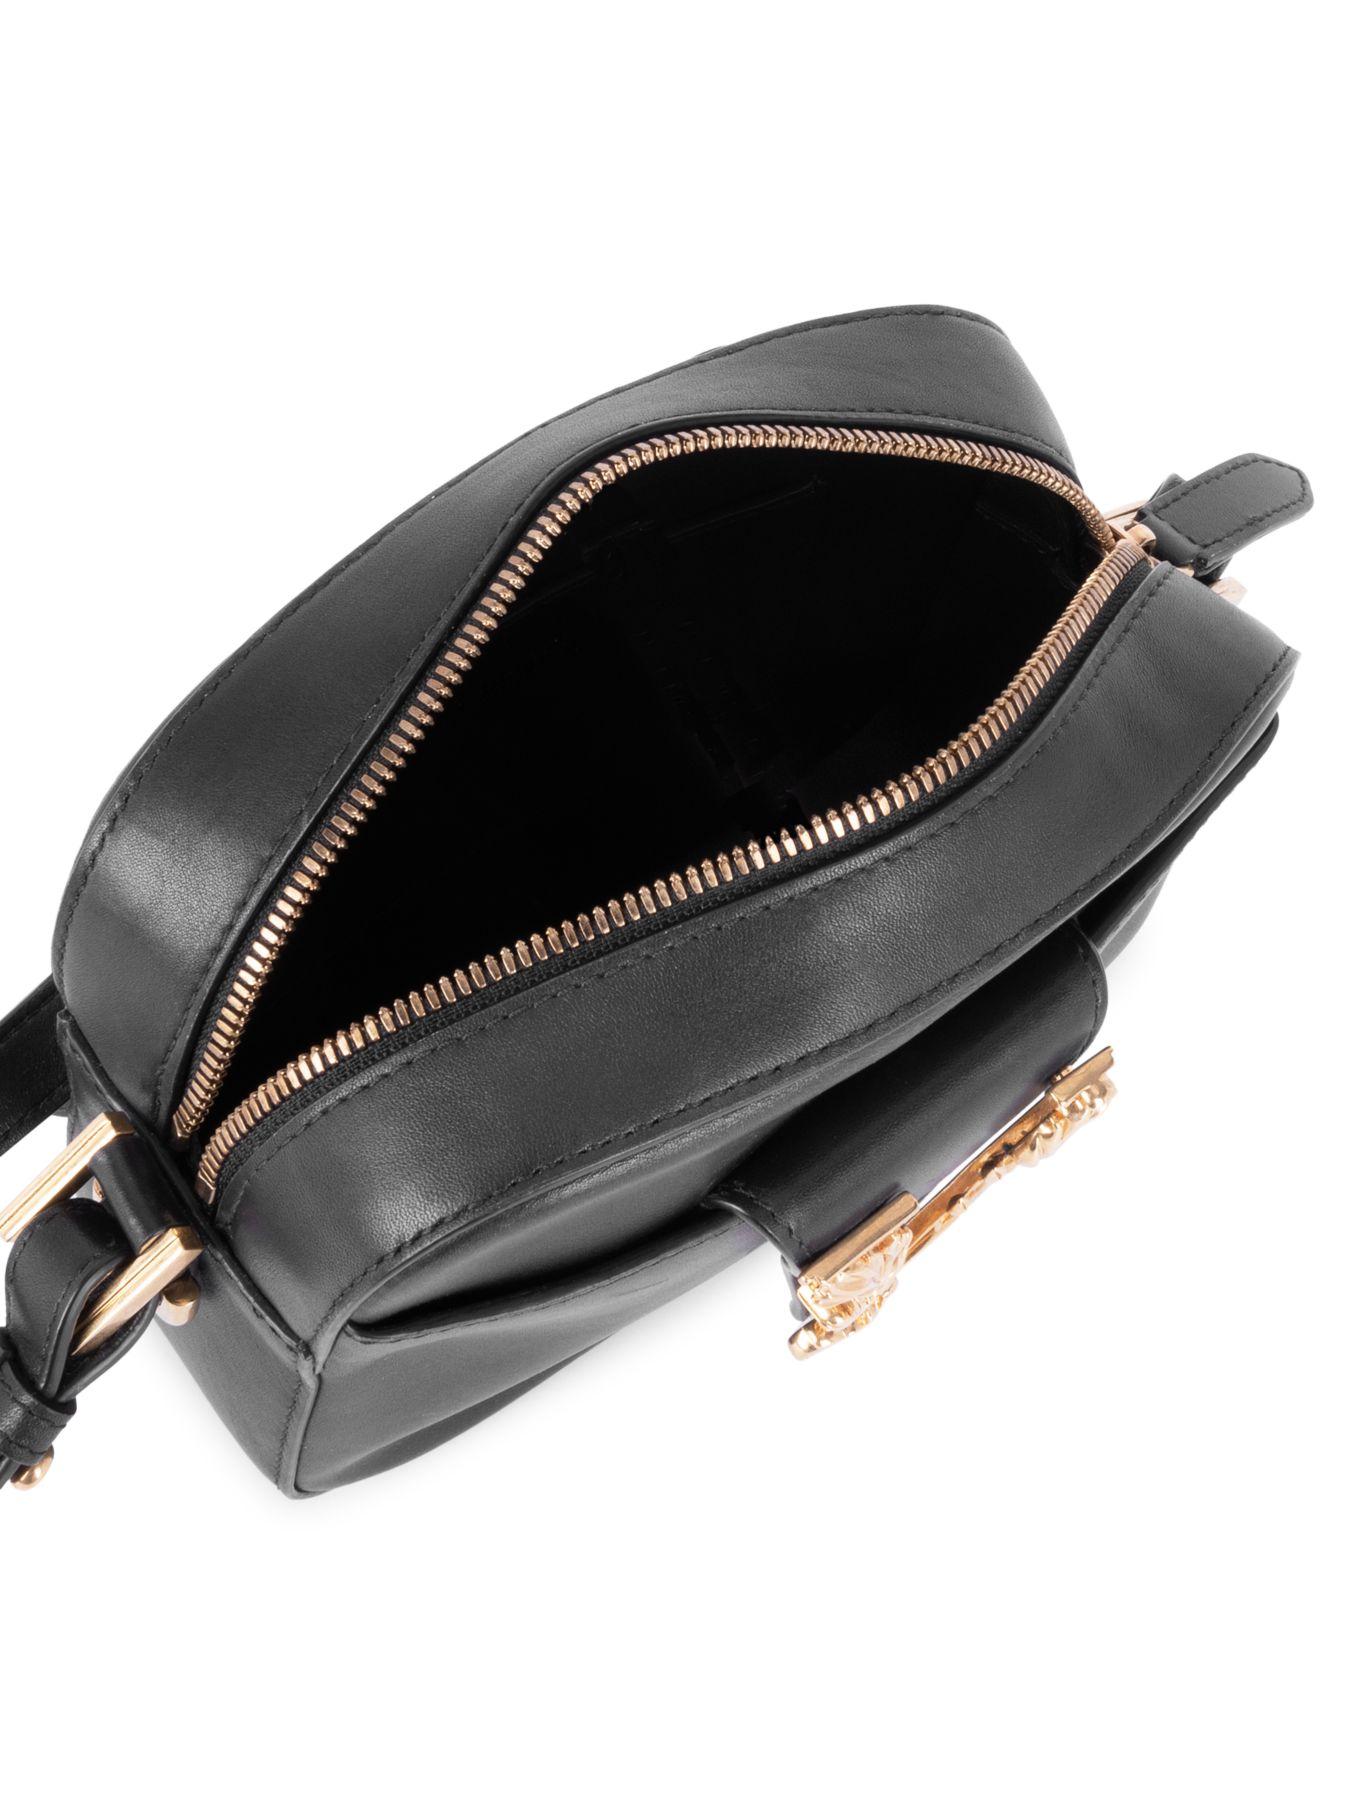 Versace Virtus Leather Camera Bag in Black - Lyst